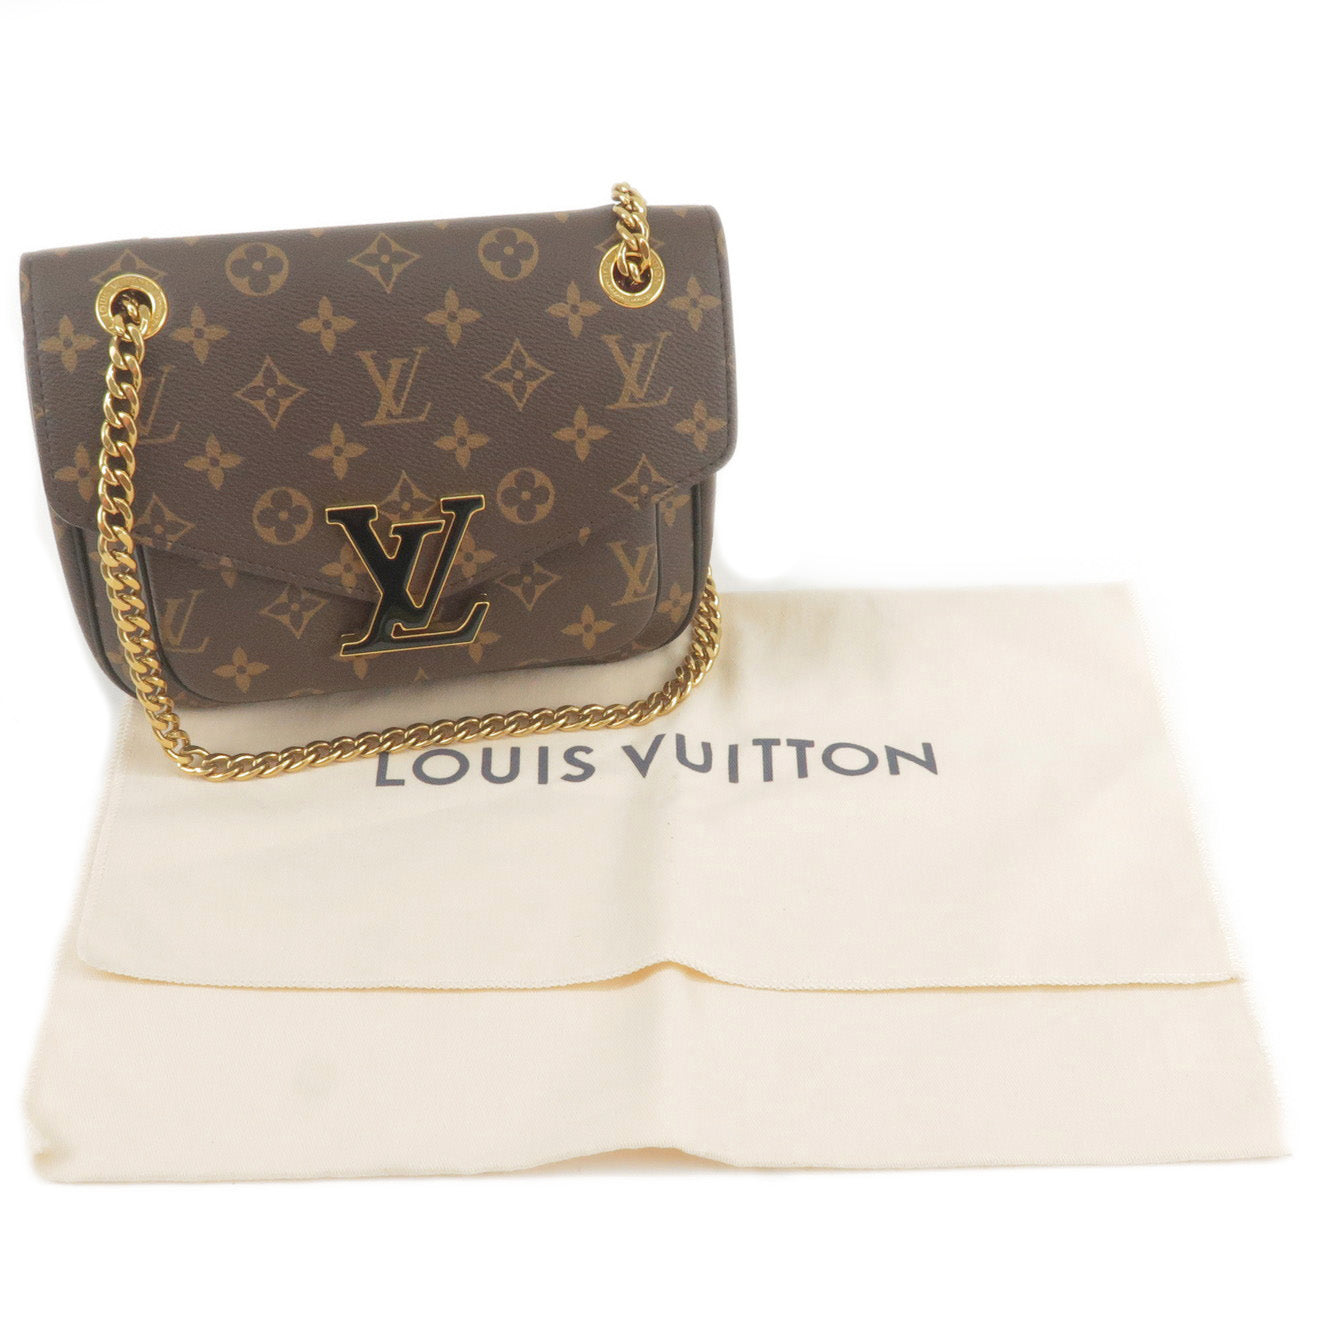 Louis Vuitton Passy Review 